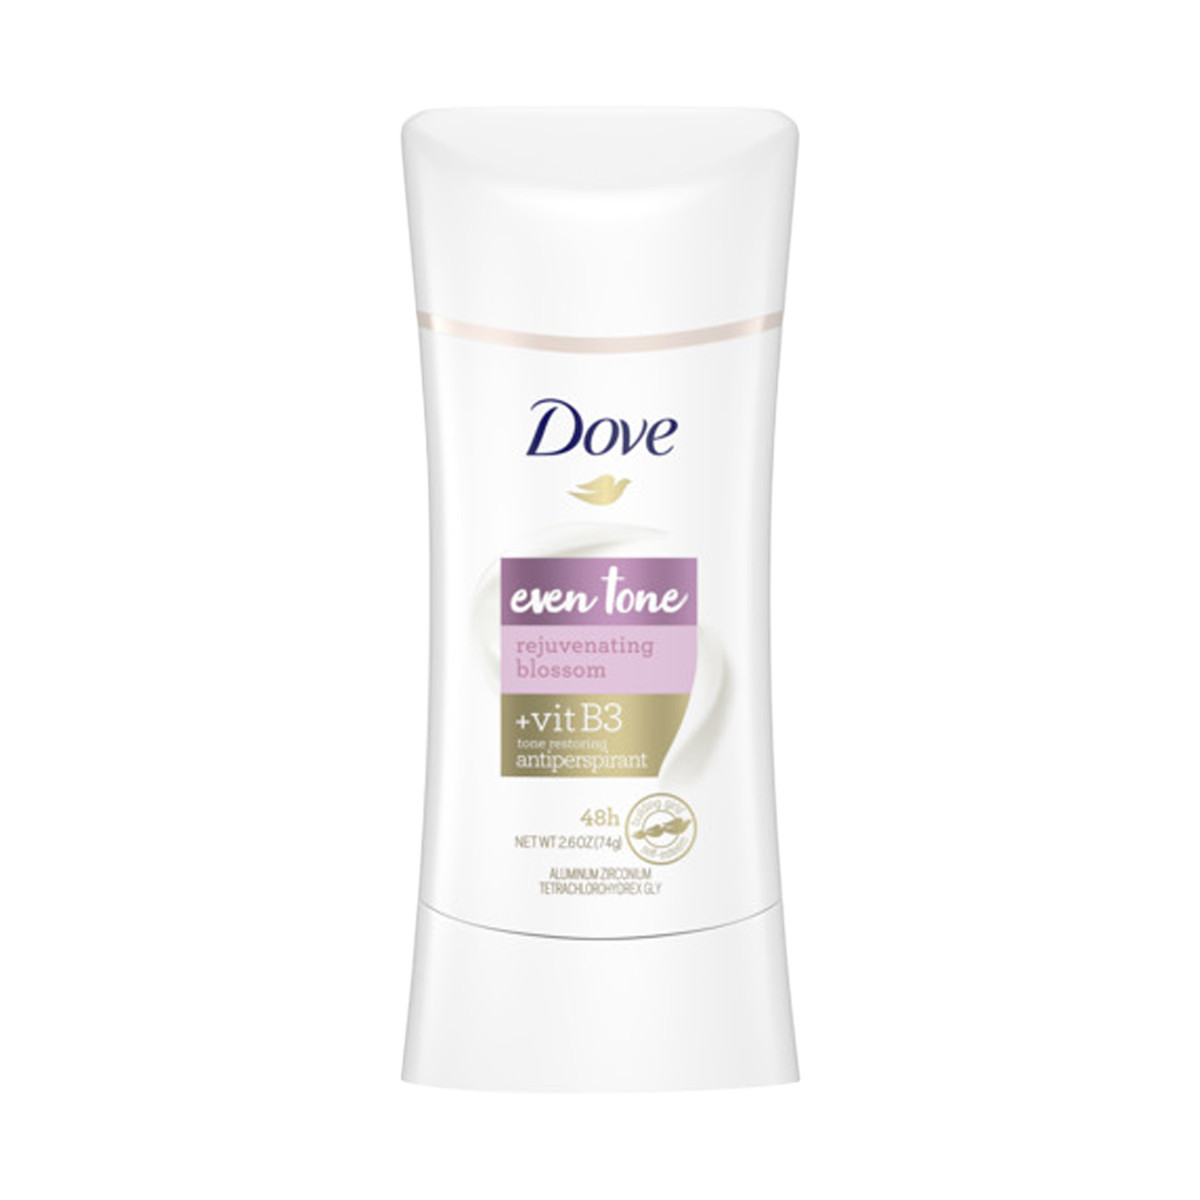 Dove Even Tone Antiperspirant Deodorant Stick, Rejuvenating Blossom, 2.6 oz